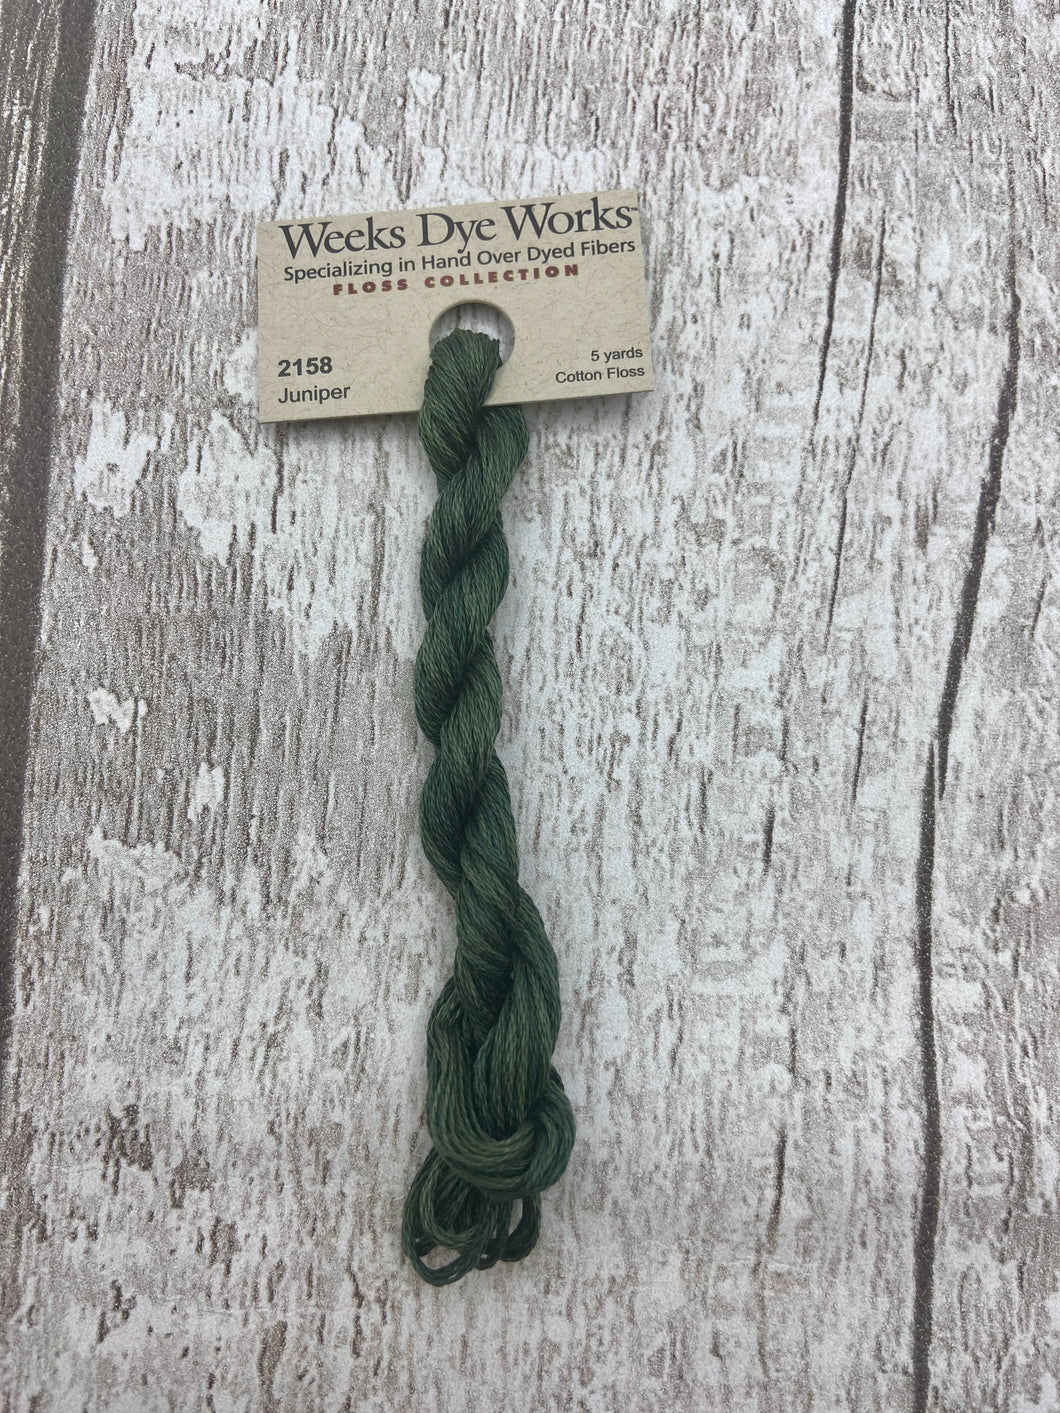 Juniper (#2158) Weeks Dye Works, 6-strand cotton floss